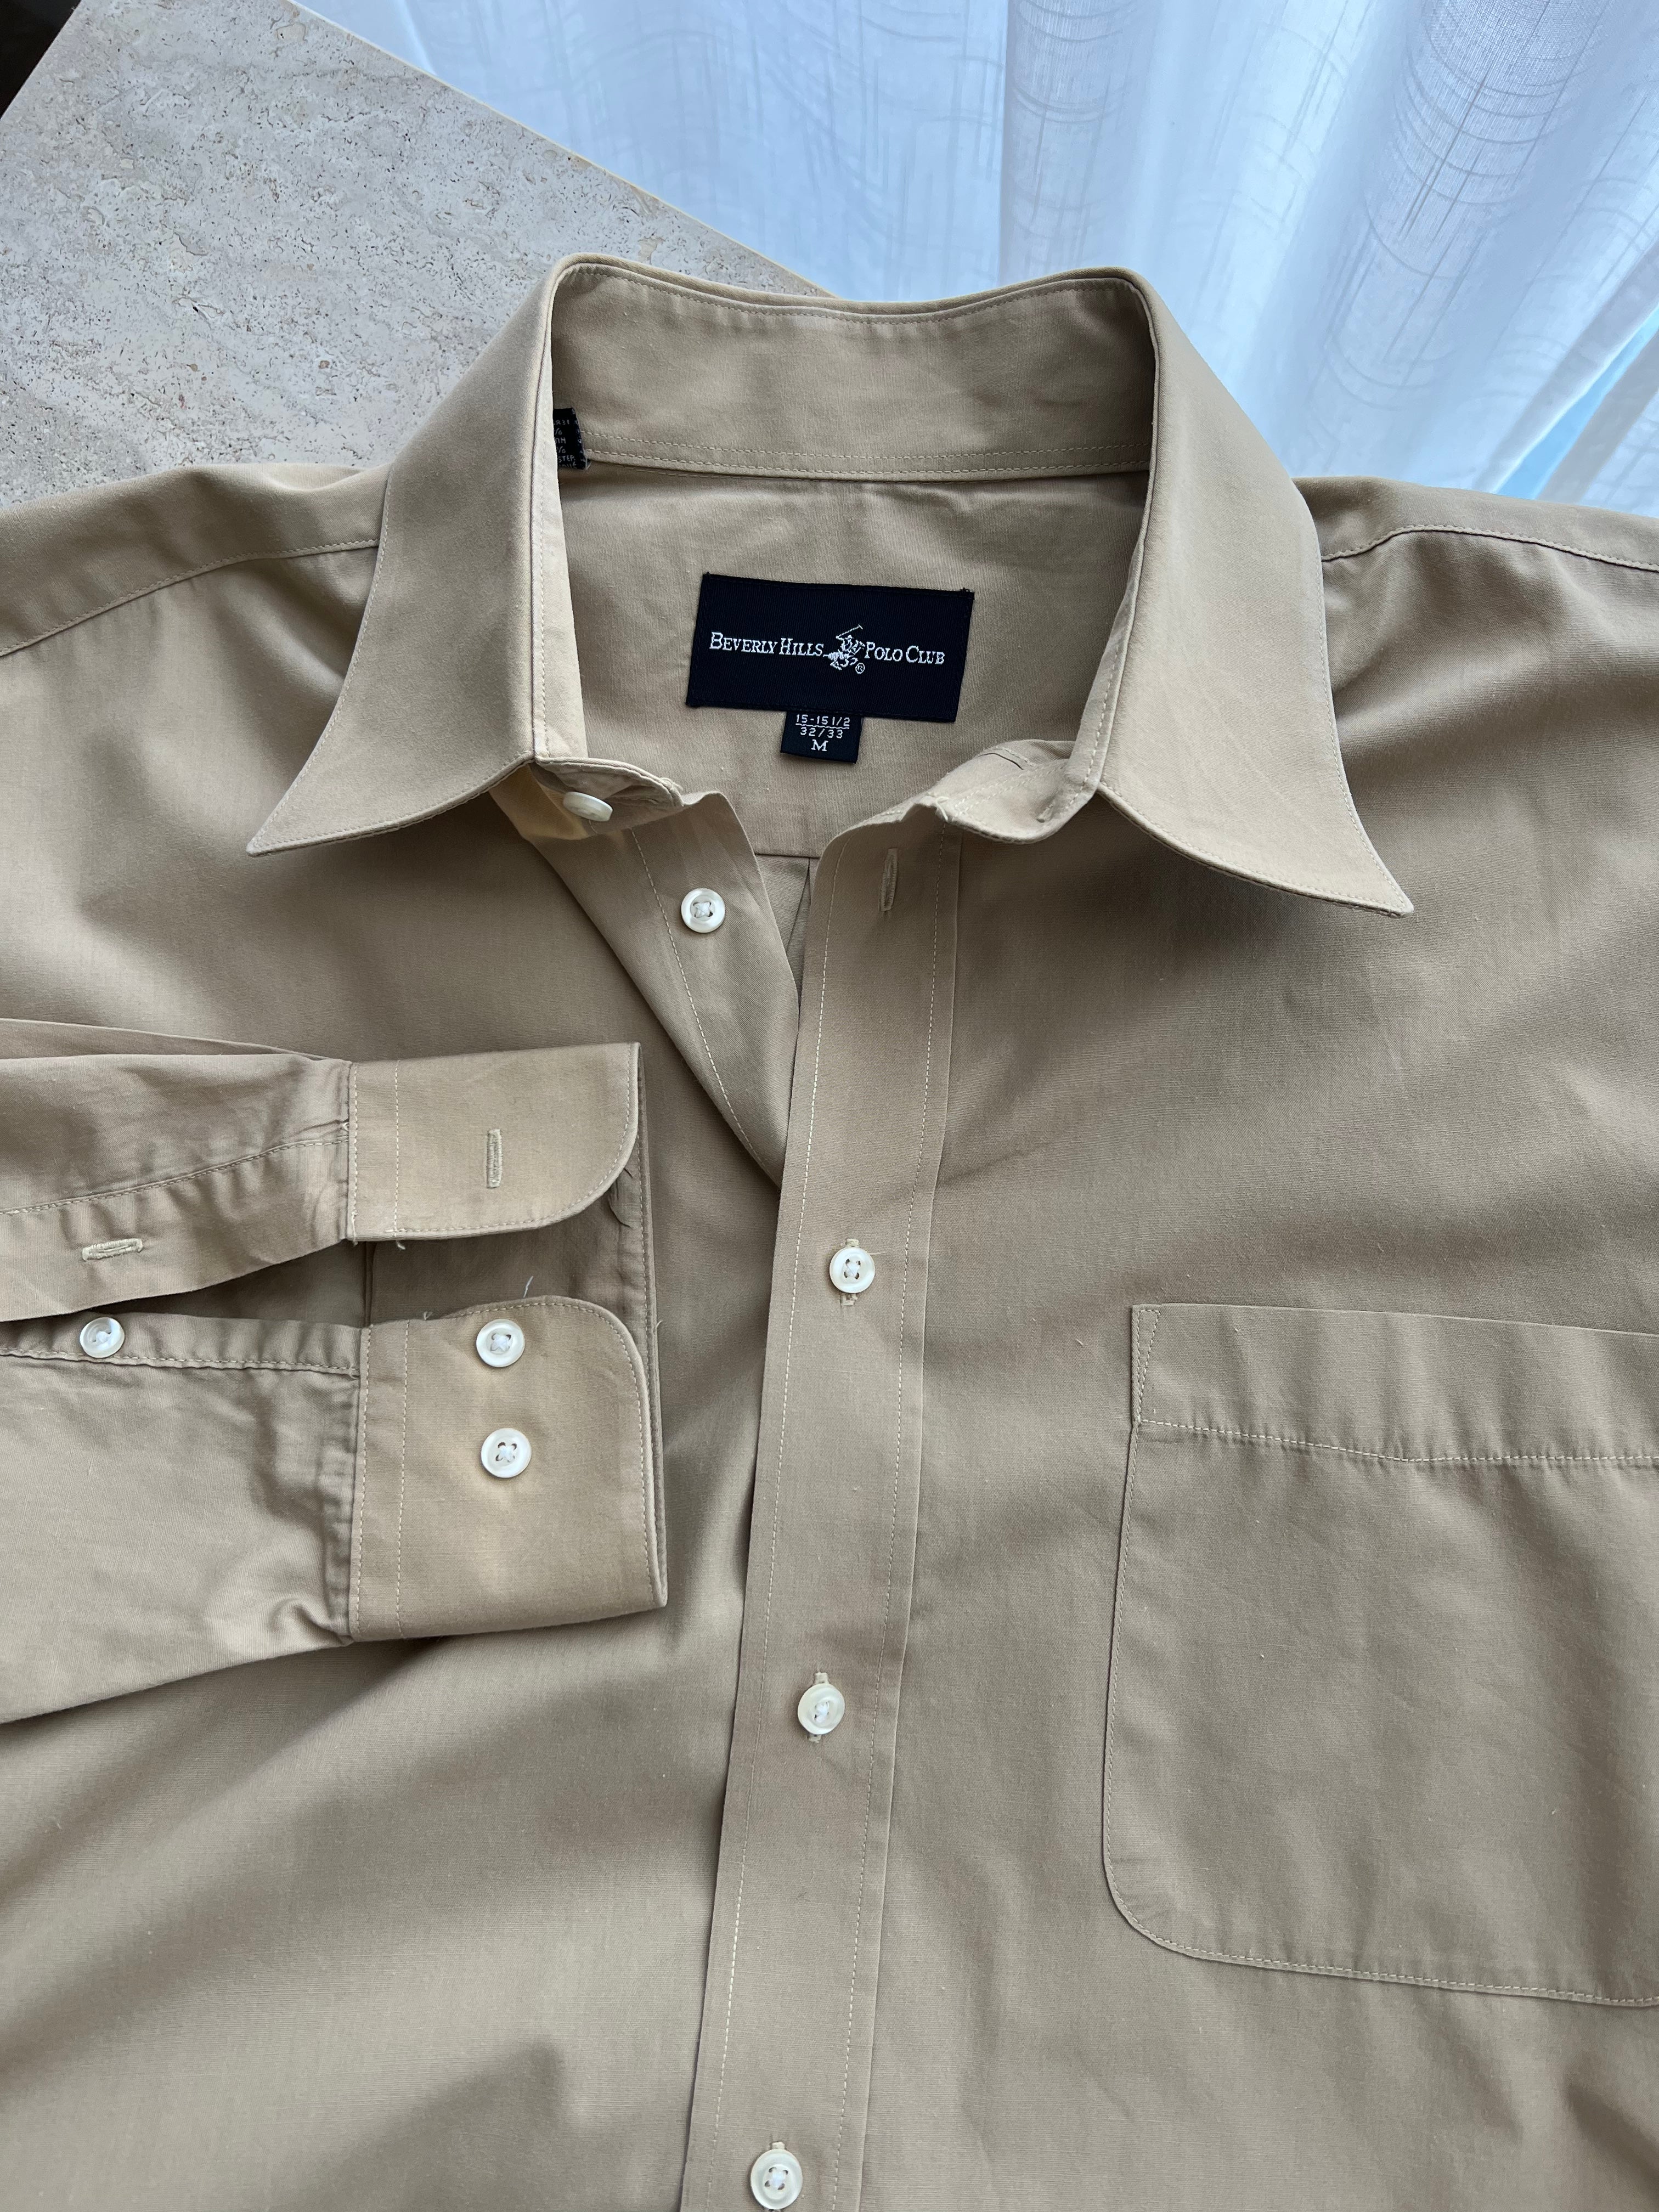 Beverly Hills Polo Club cotton blend camel shirt